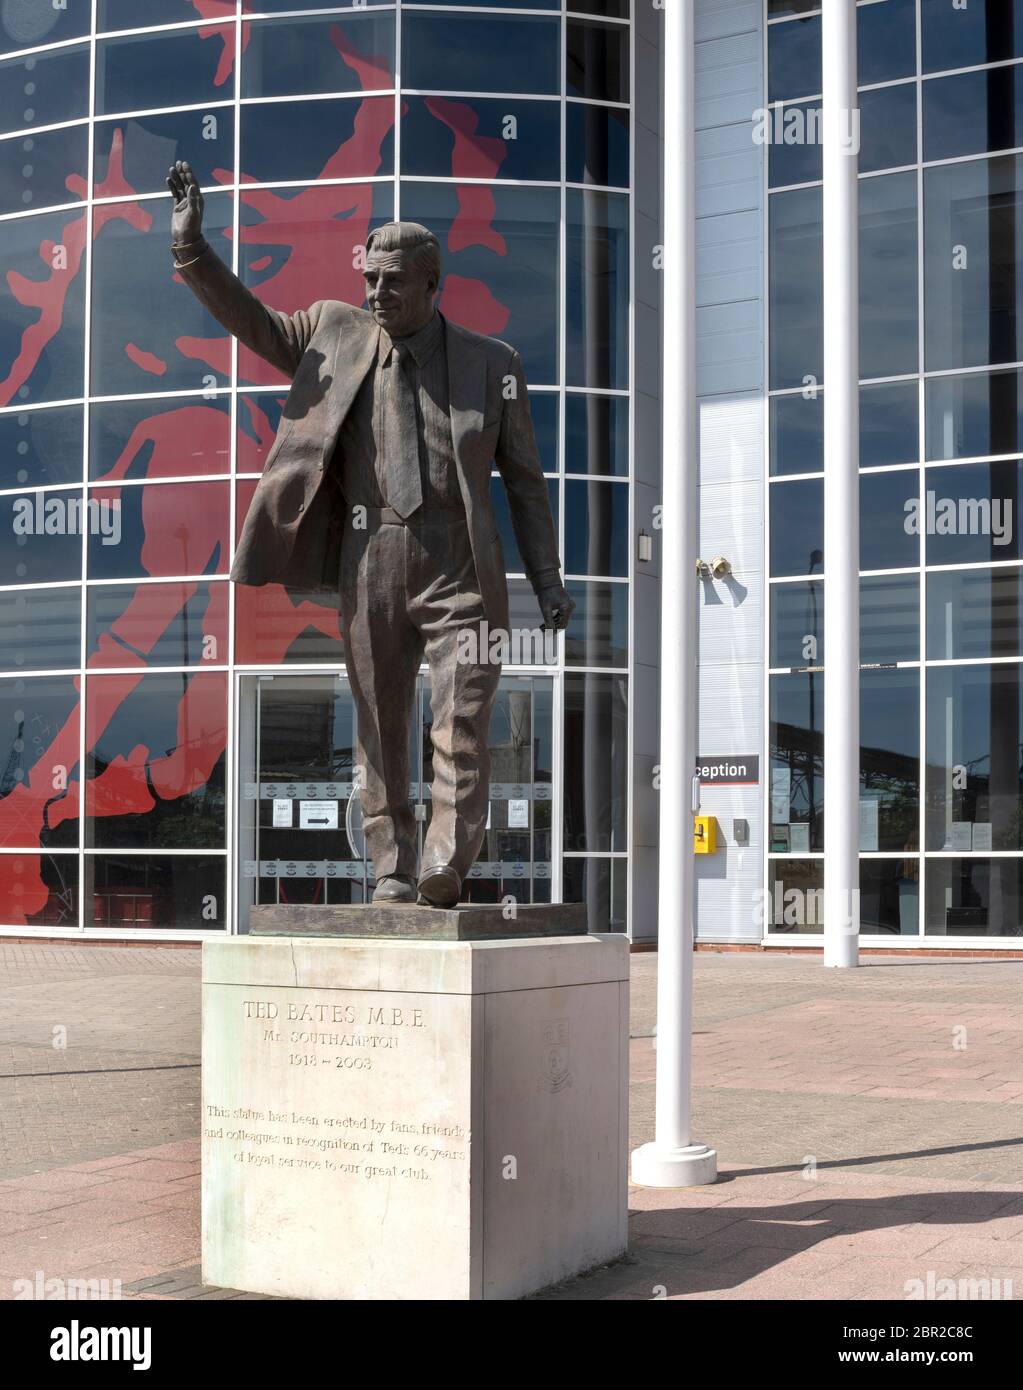 Statue of Ted Bates (Edric Thornton Bates MBE) - 1918 - 2003 -  at the entrance to St Marys Stadium home of Southampton Football Club, Hampshire, UK. Stock Photo